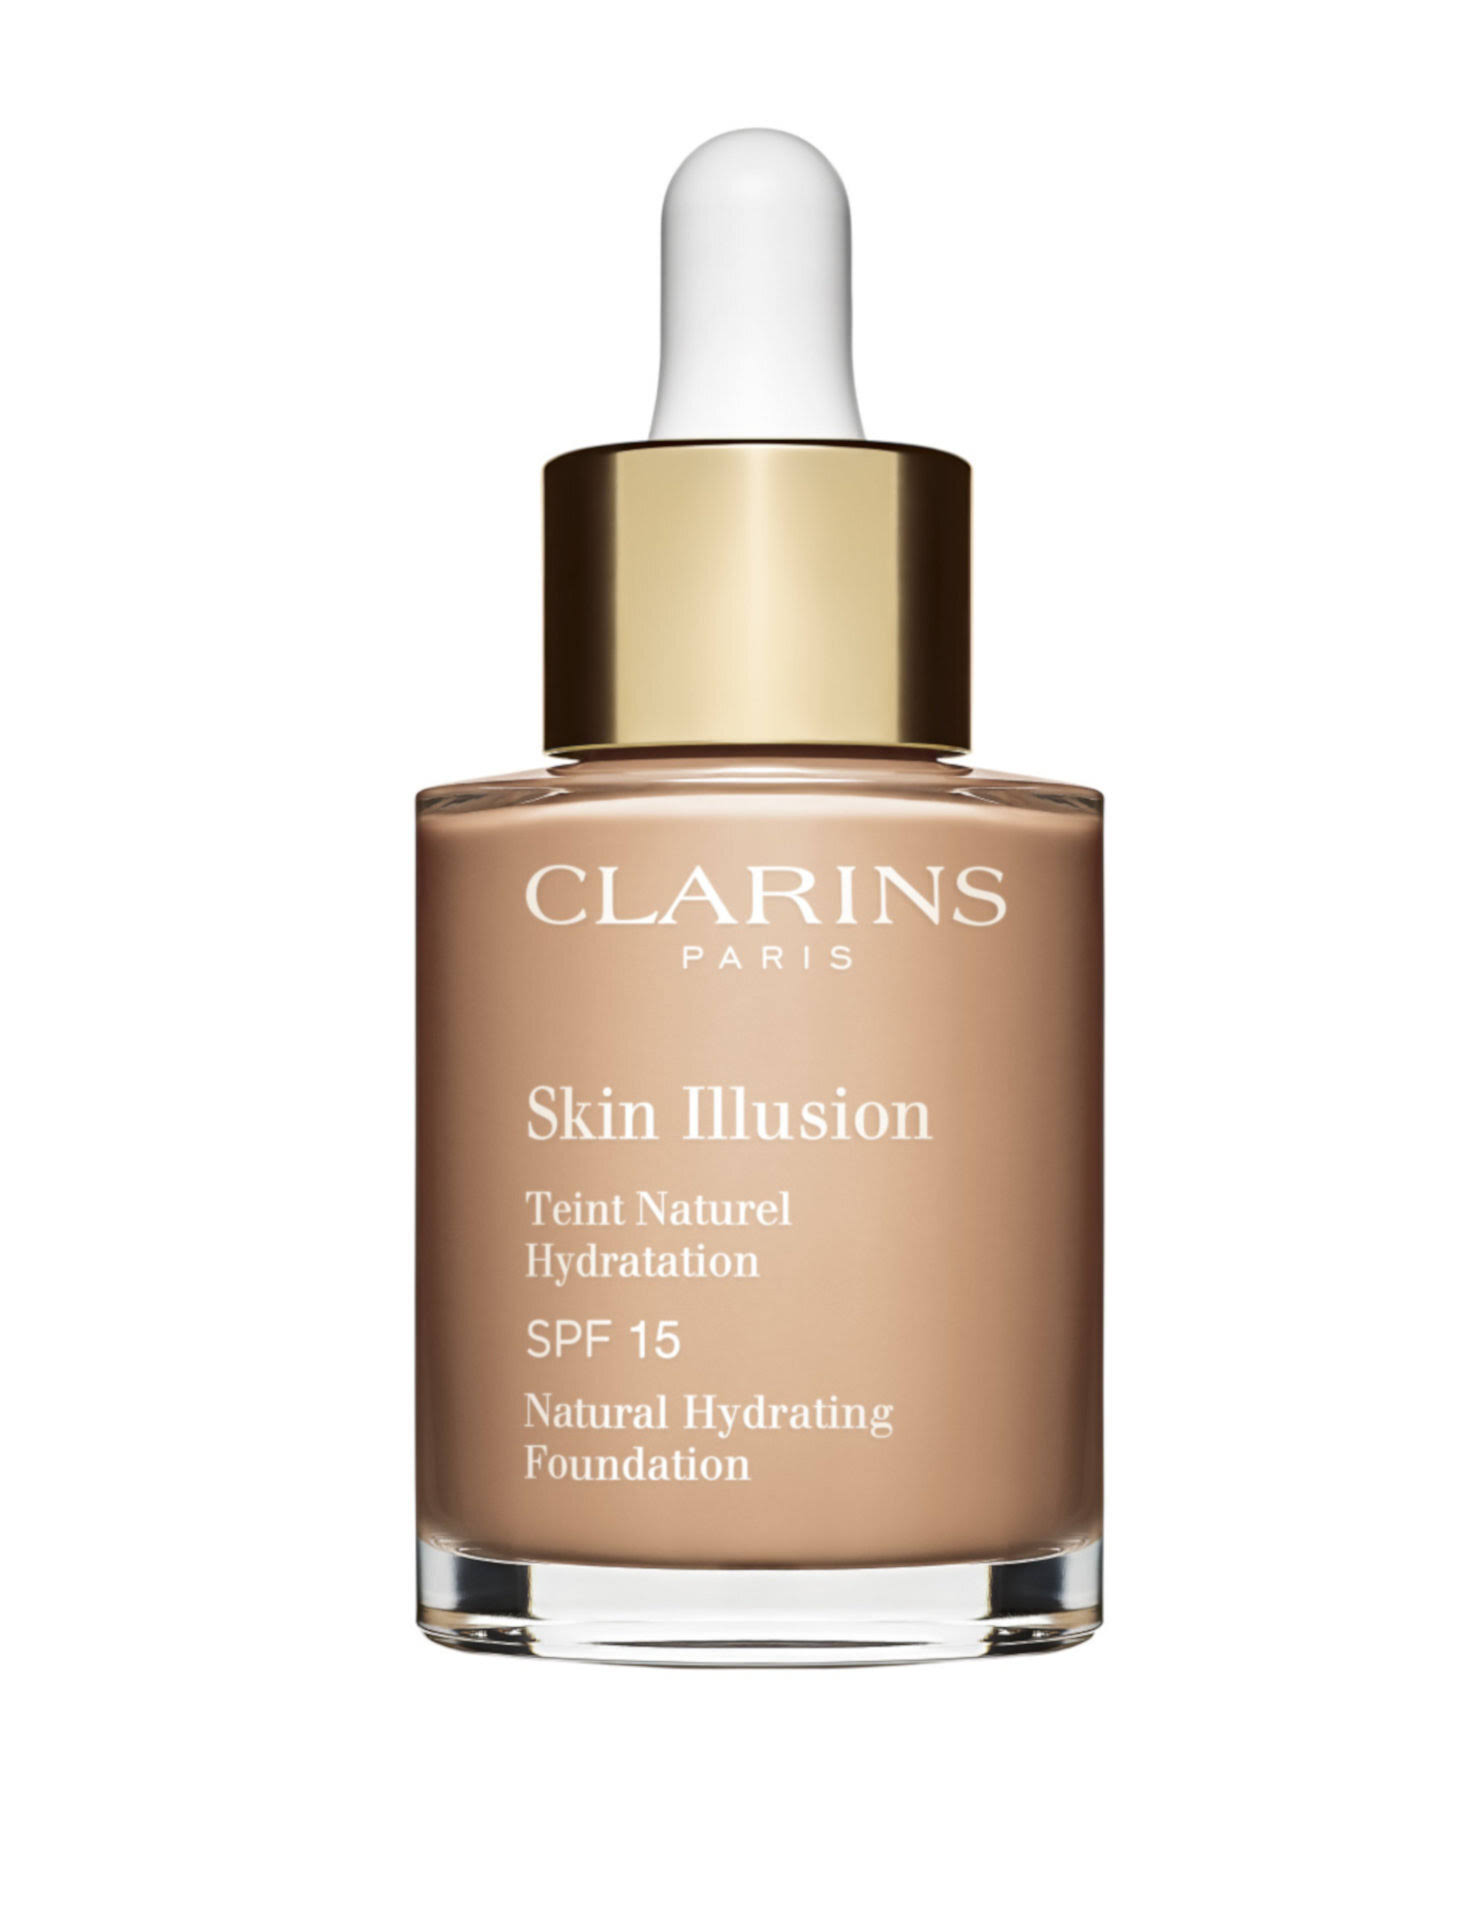 Clarins Skin Illusion Natural Hydrating Foundation - SPF15, #107 Beige, 30ml